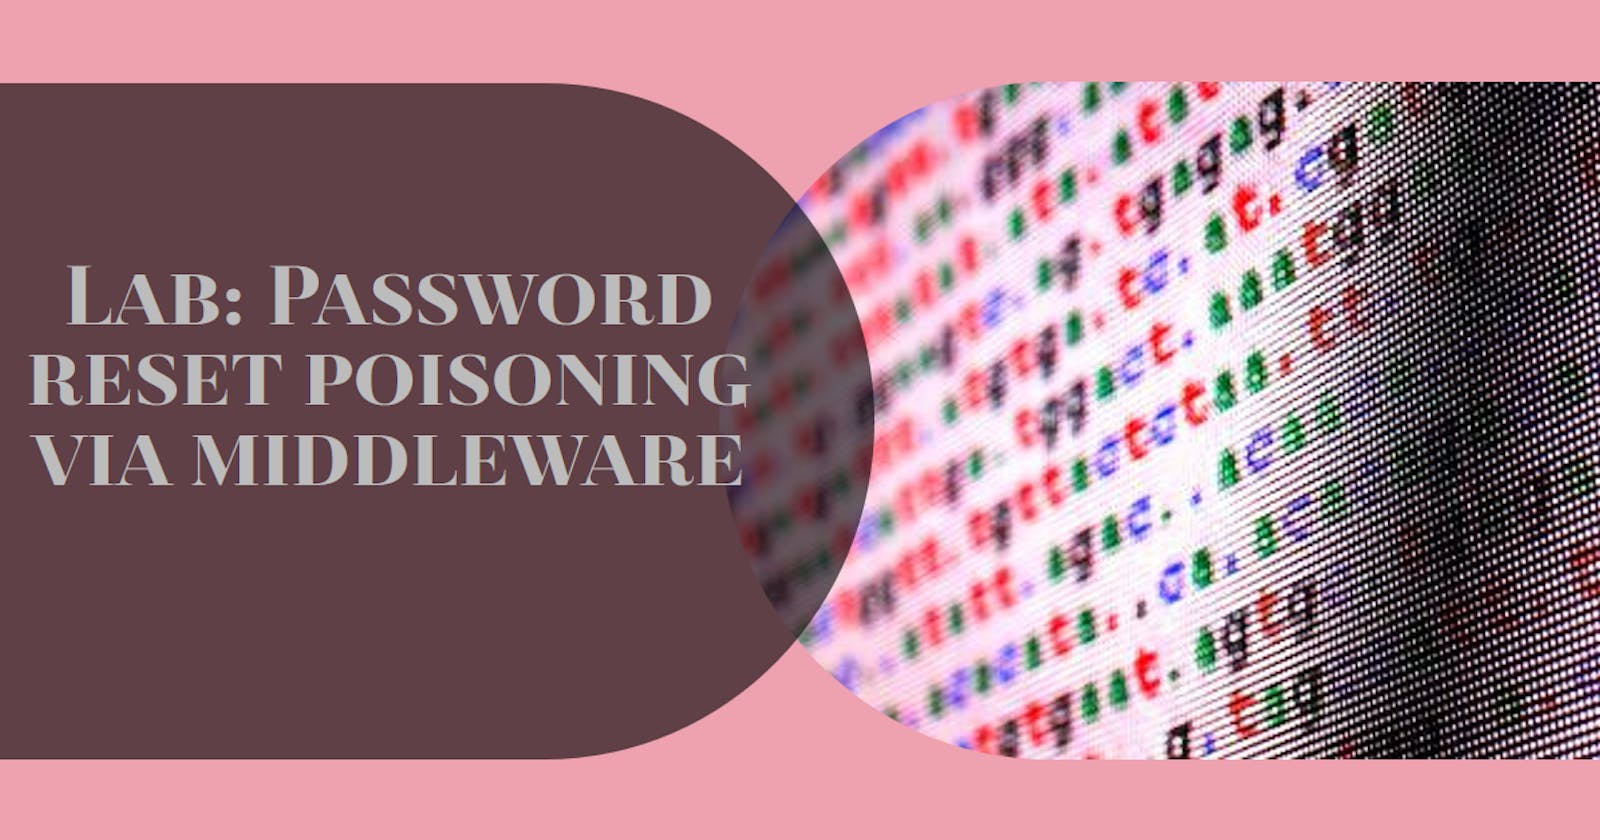 Lab: Password reset poisoning via middleware